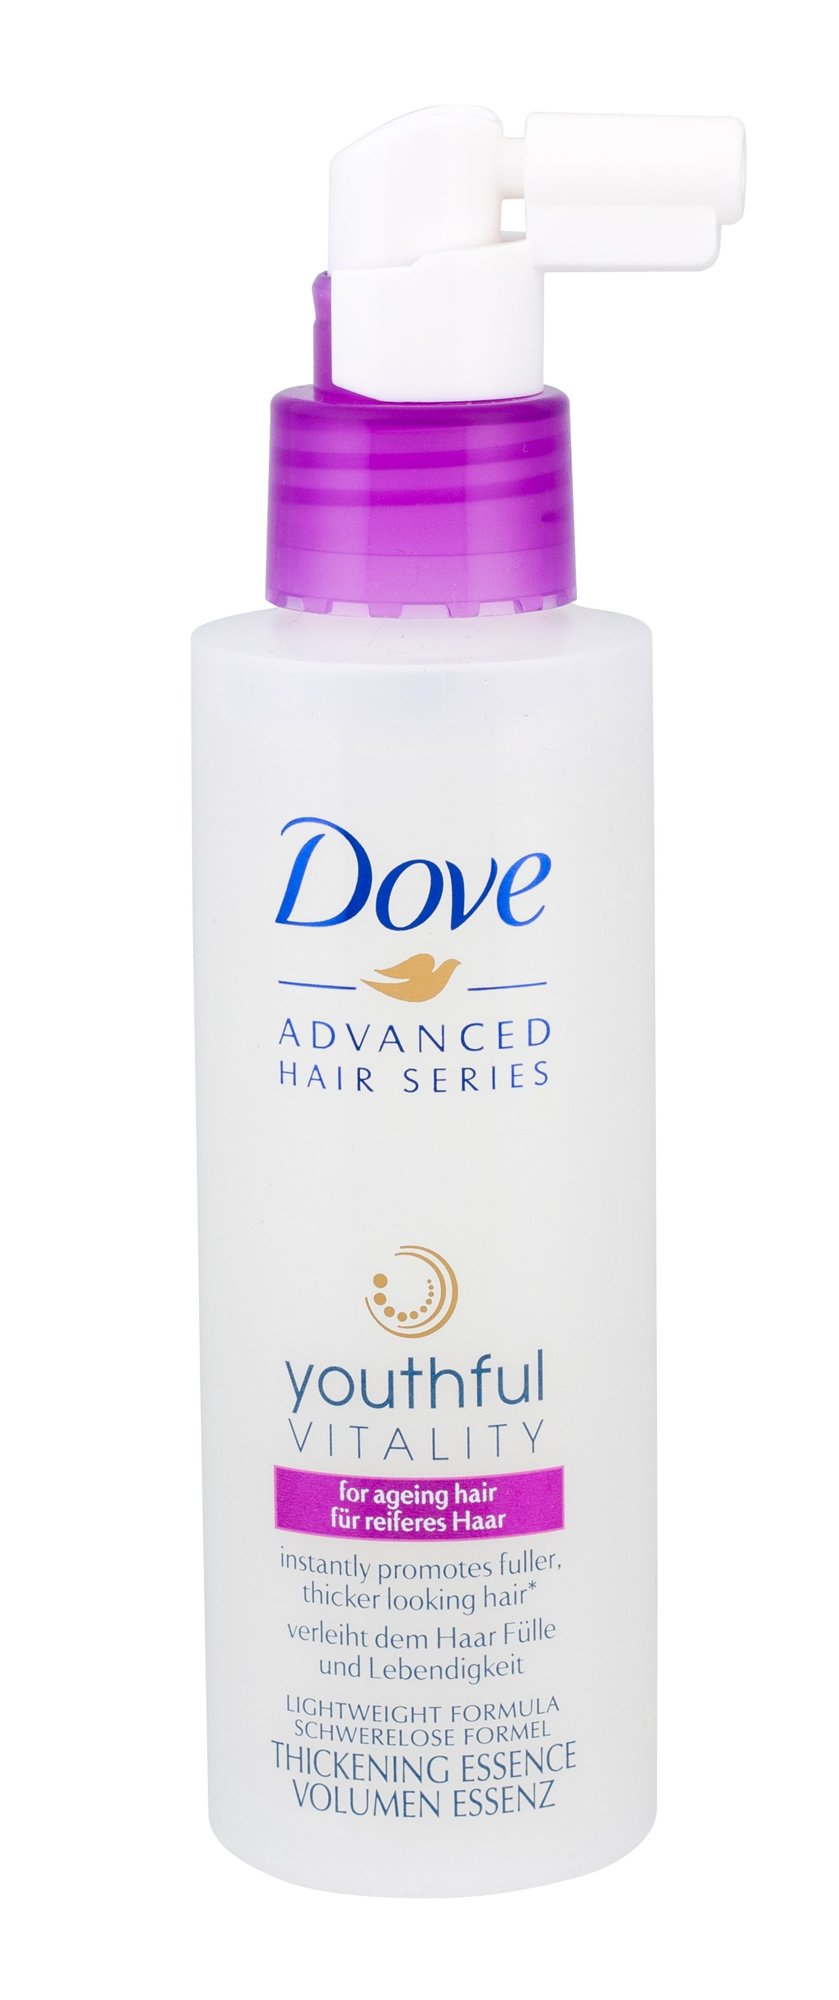 Dove Advanced Hair Series Youthful Vitality Essence